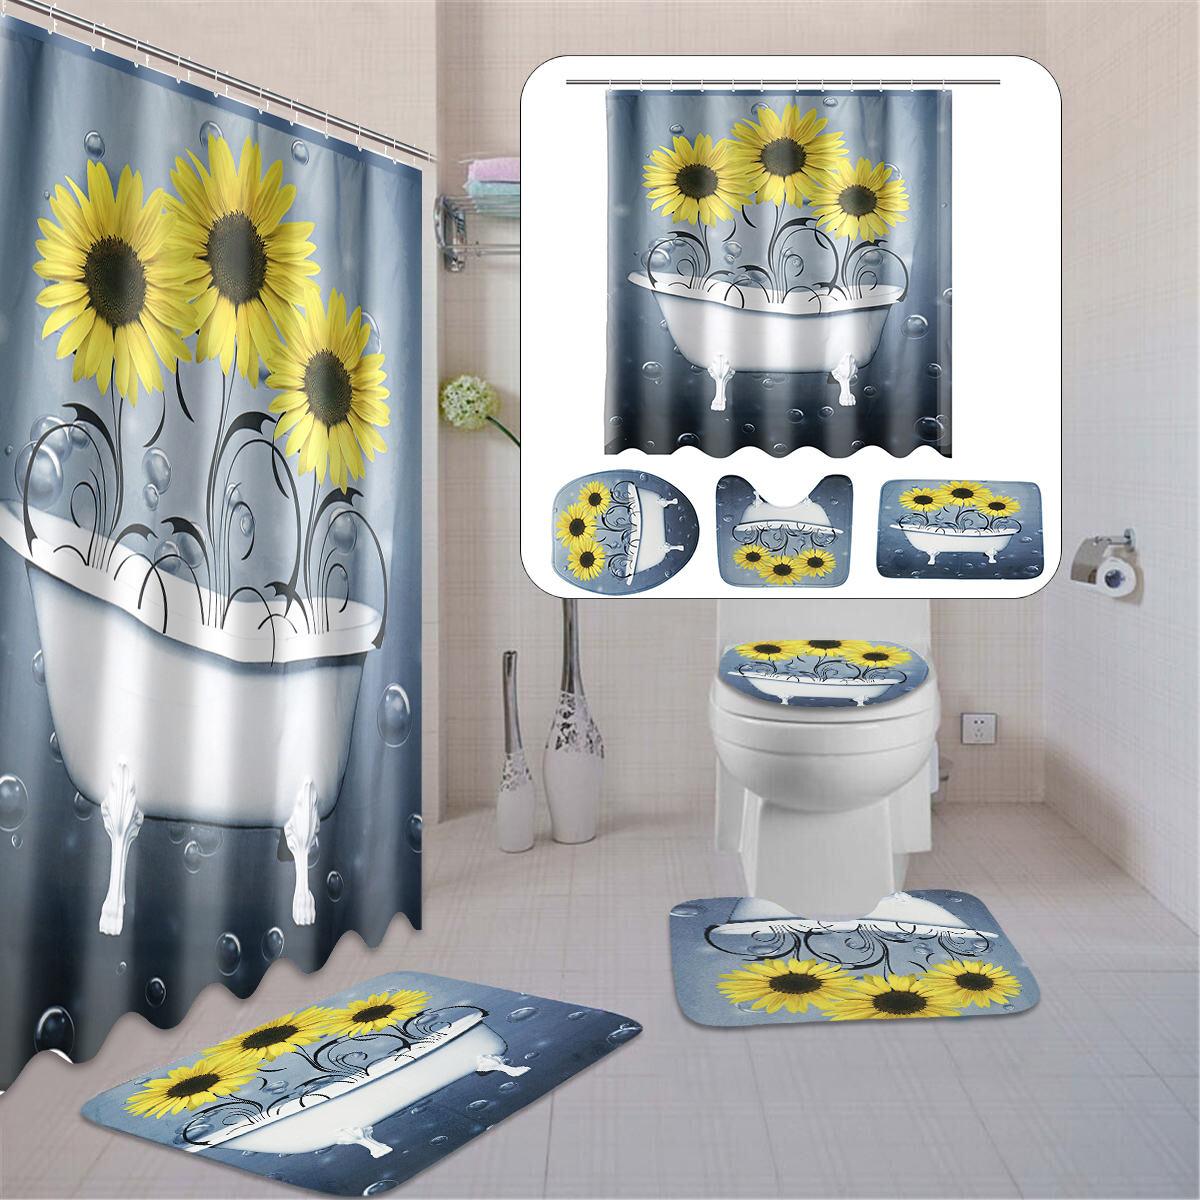 Sunflower-Shower-Curtain-Non-Slip-with-Free-Hooks-Waterproof-Fabric-Bathroom-Set-1821914-2